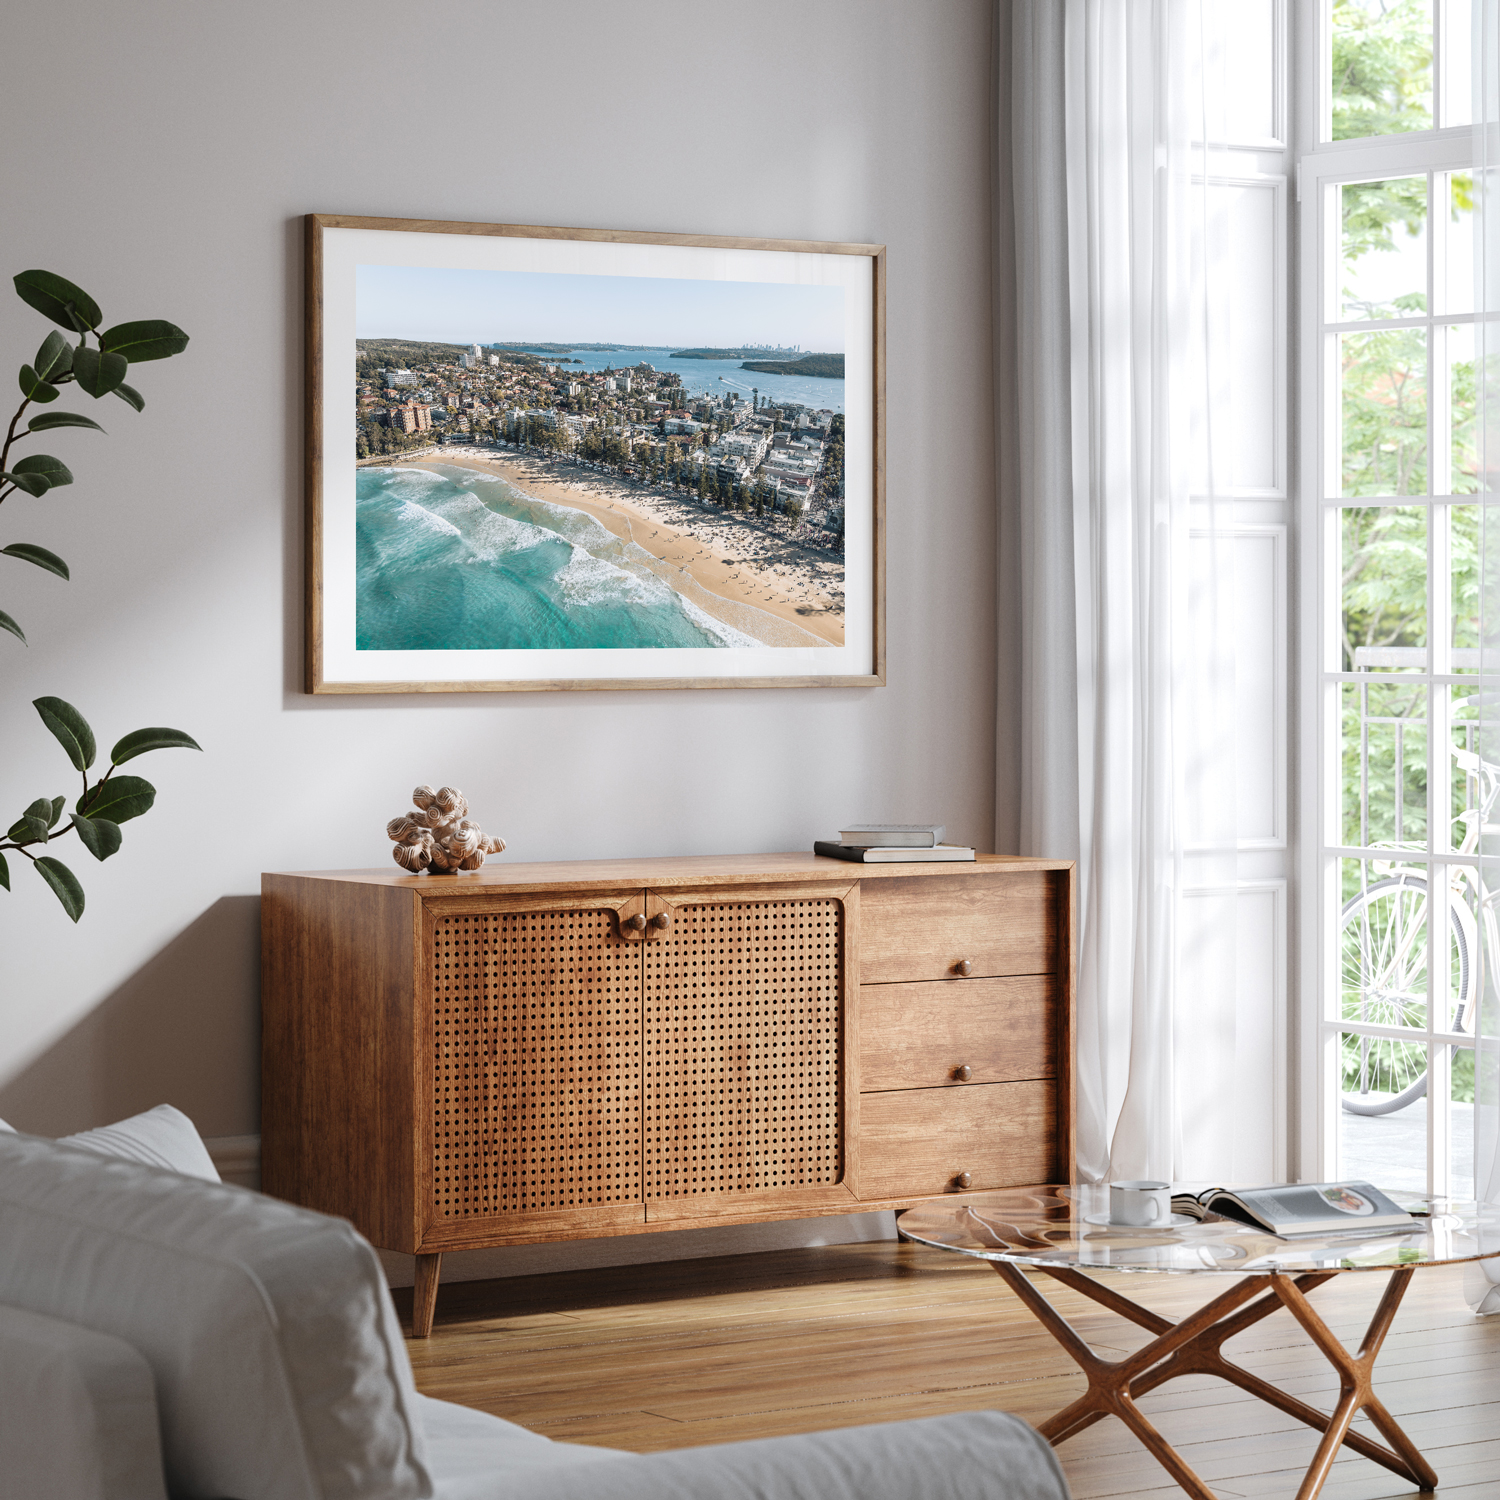 Large Manly Beach Coastal Artwork in a Coastal Living Room Decor.